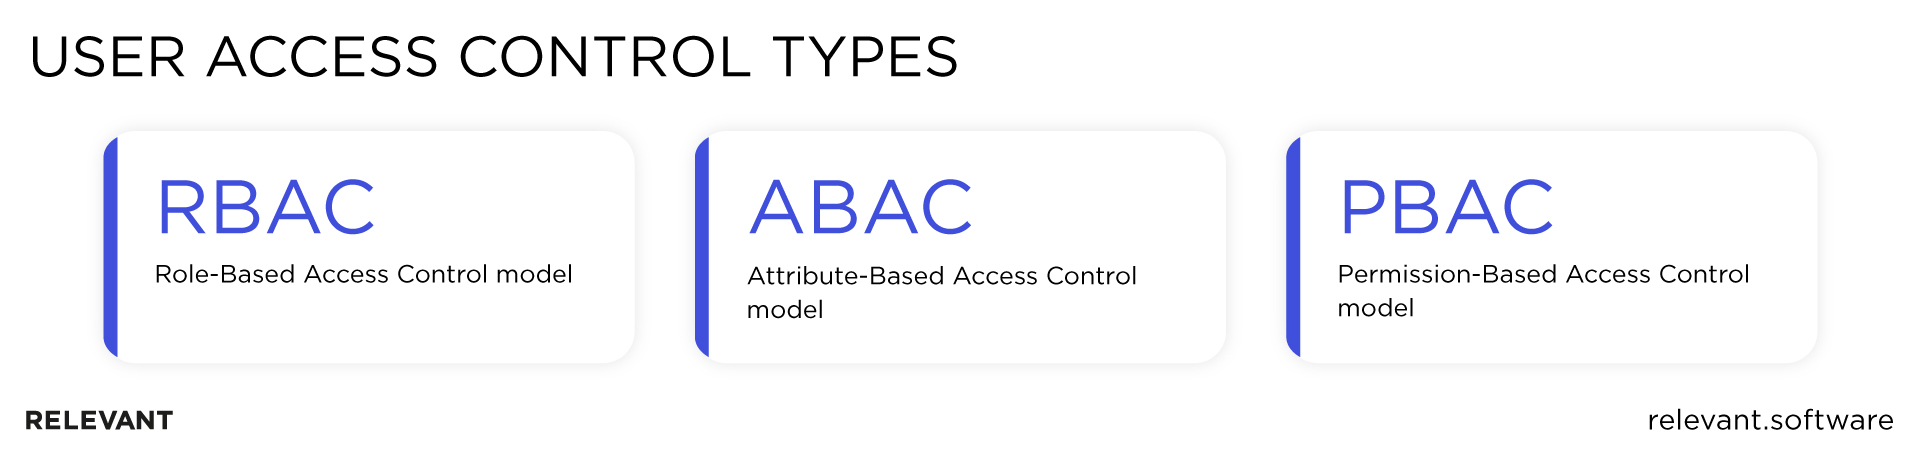 User access control types: RBAC vs. ABAC vs. PBAC